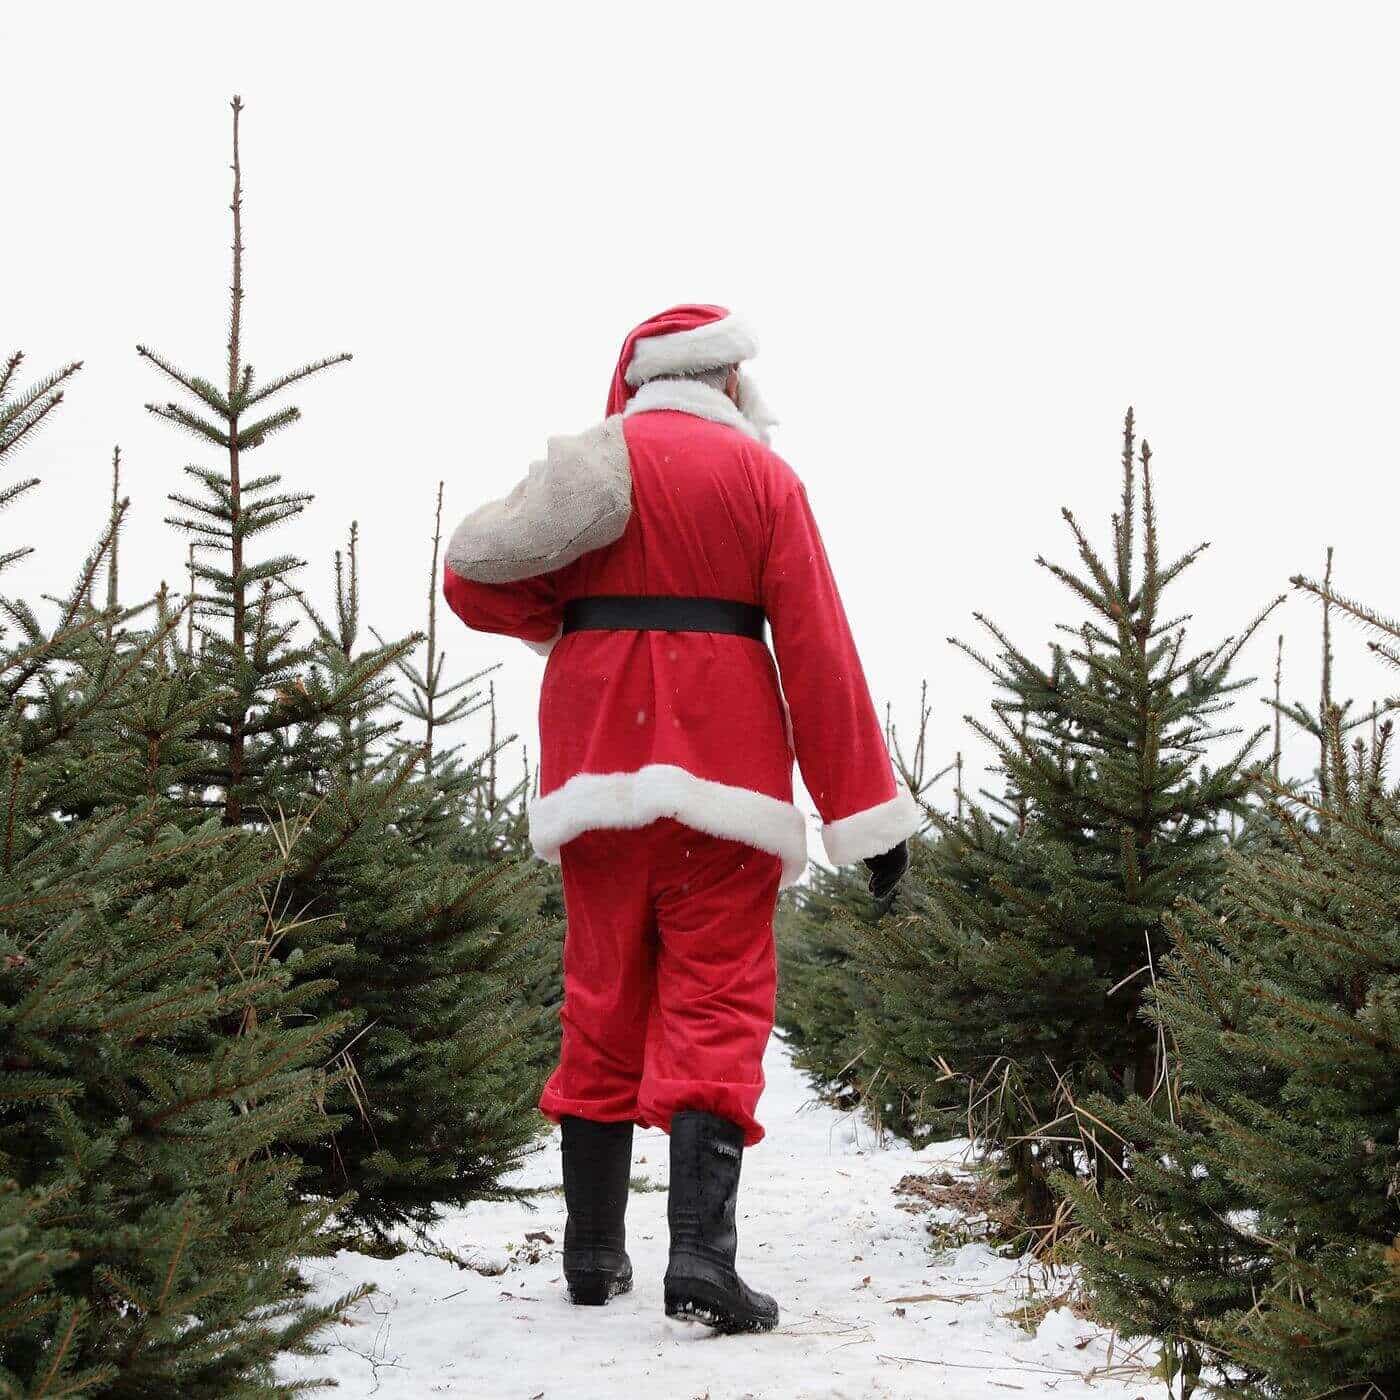 Dark impact of Christmas on the environment